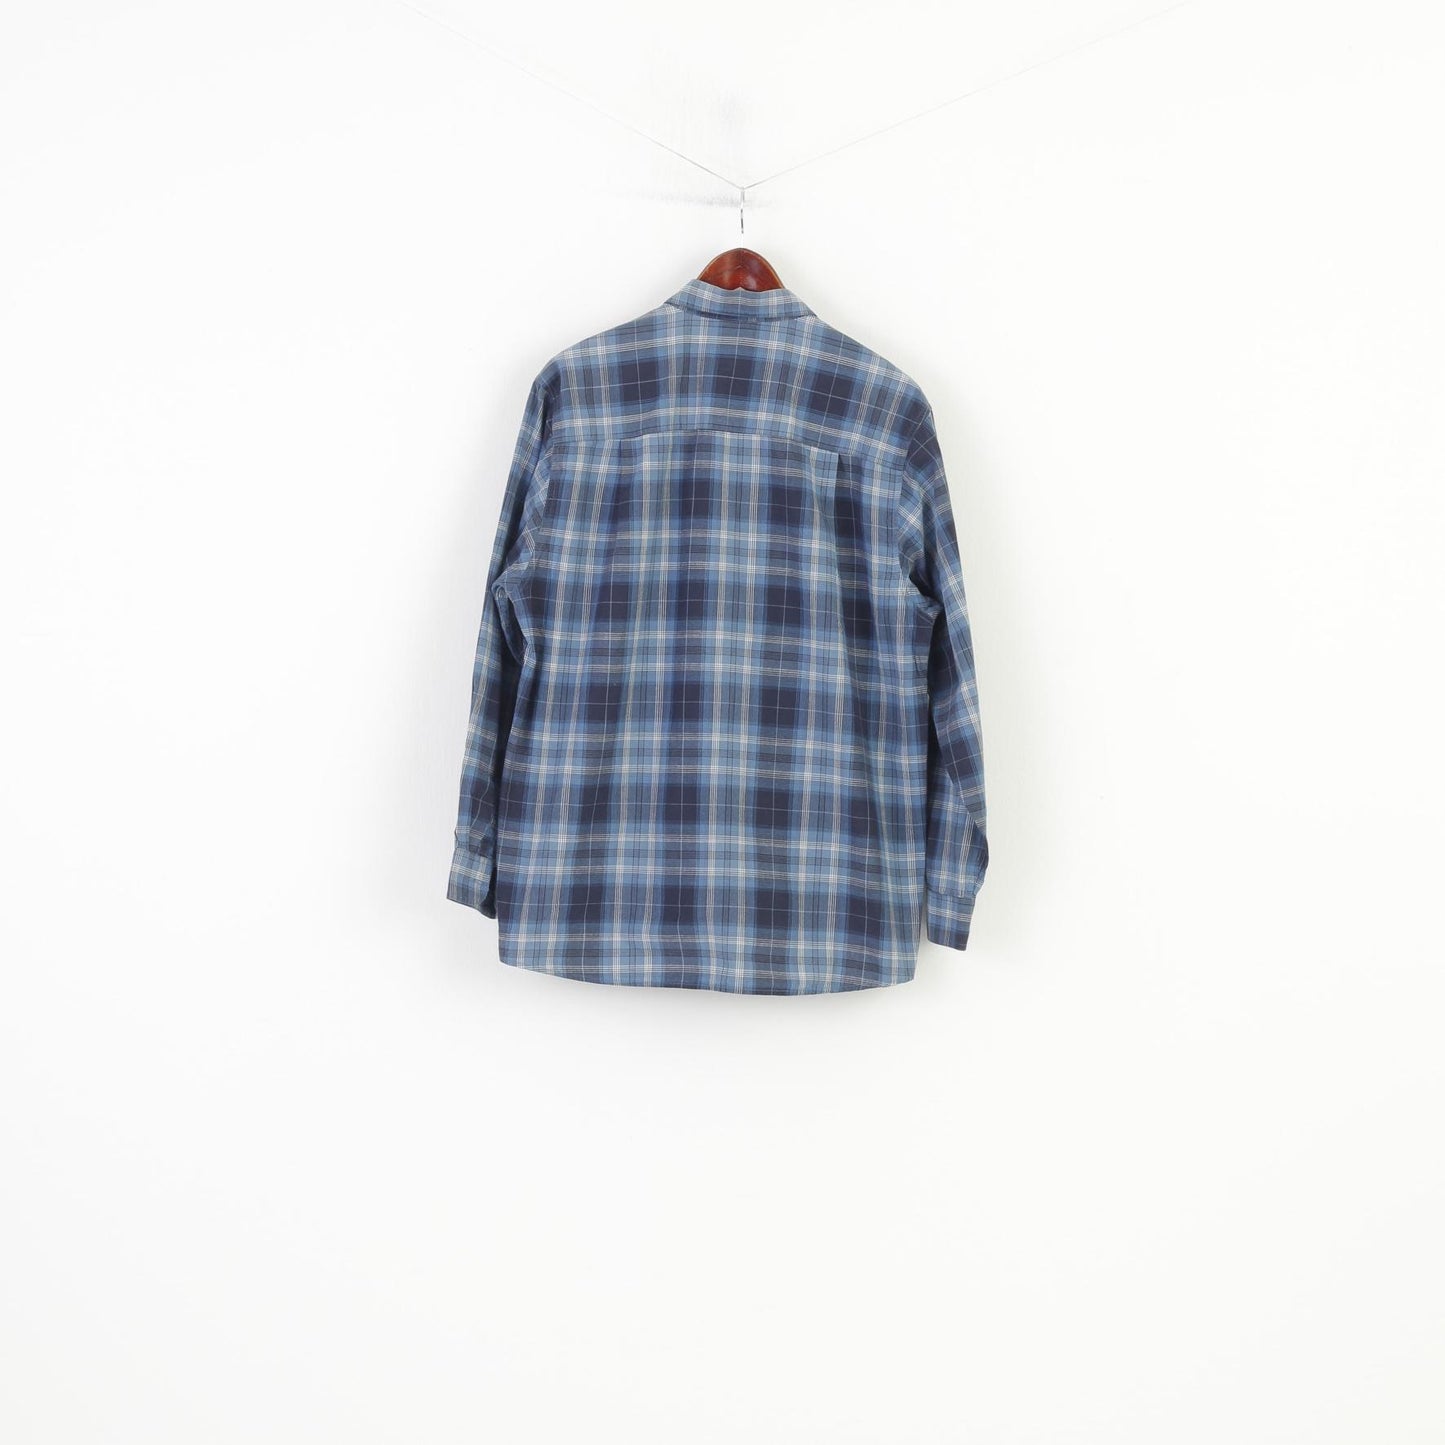 Globetrotter Men L 4142 Casual Shirt Checkered  Down Collar Blue Long Sleeve Cotton Top